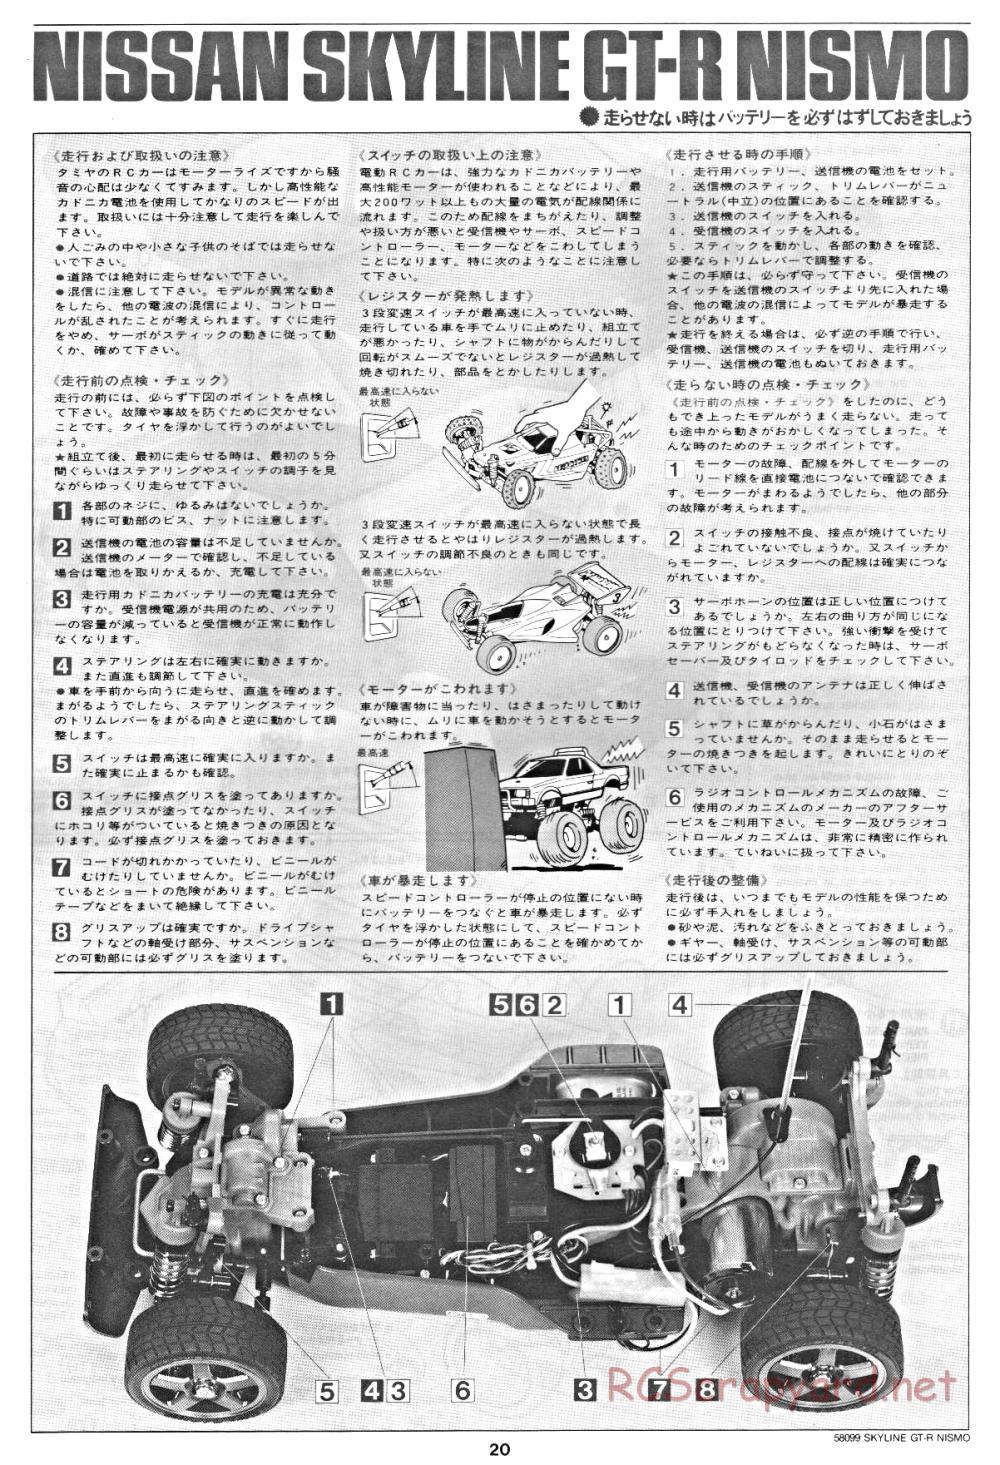 Tamiya - Nissan Skyline GT-R Nismo - 58099 - Manual - Page 20